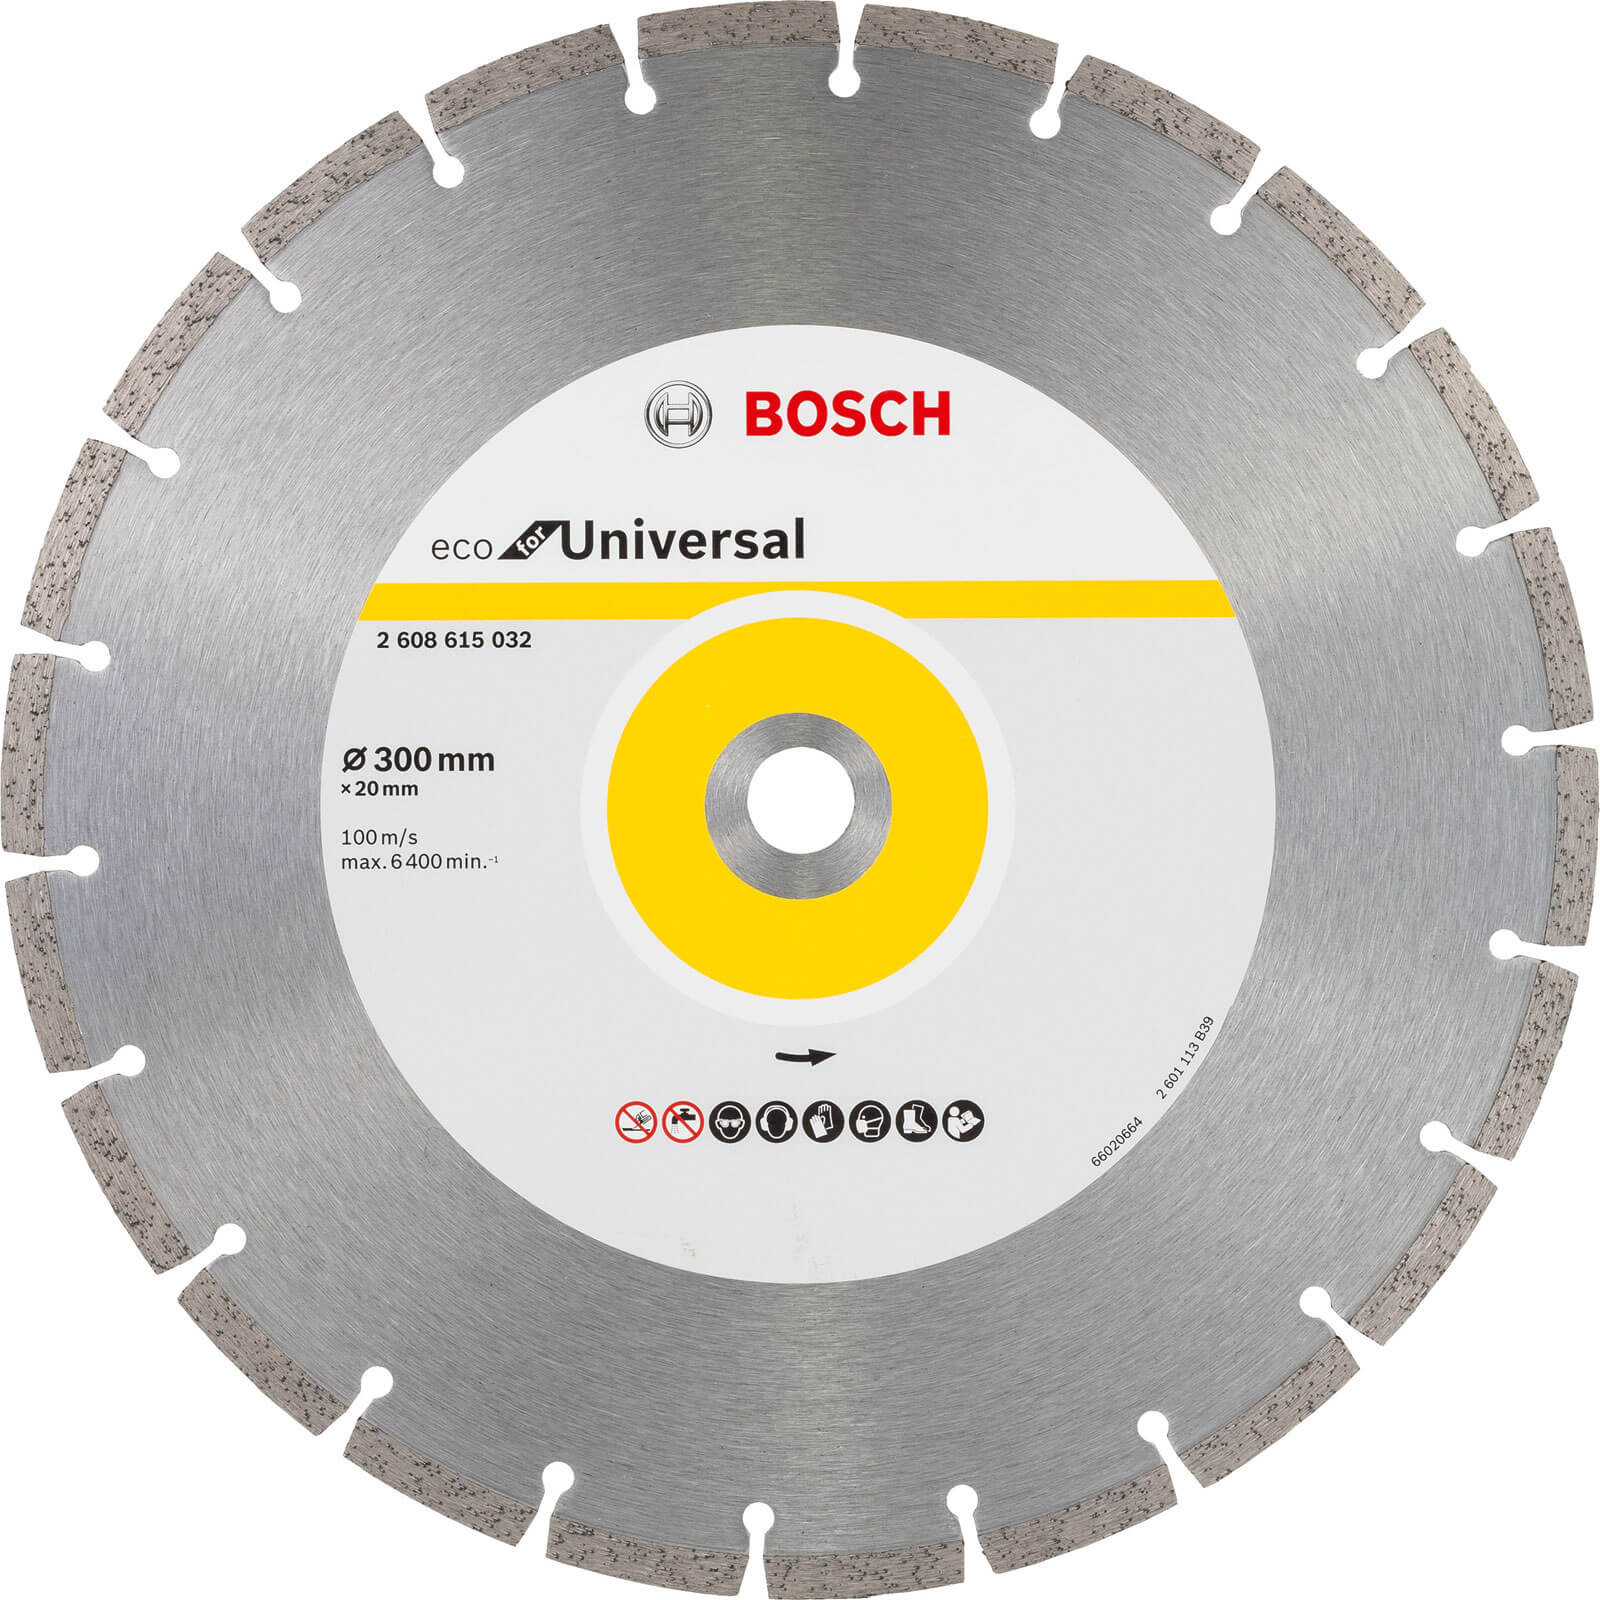 Photo of Bosch 300mm Eco Universal Diamond Blade 300mm